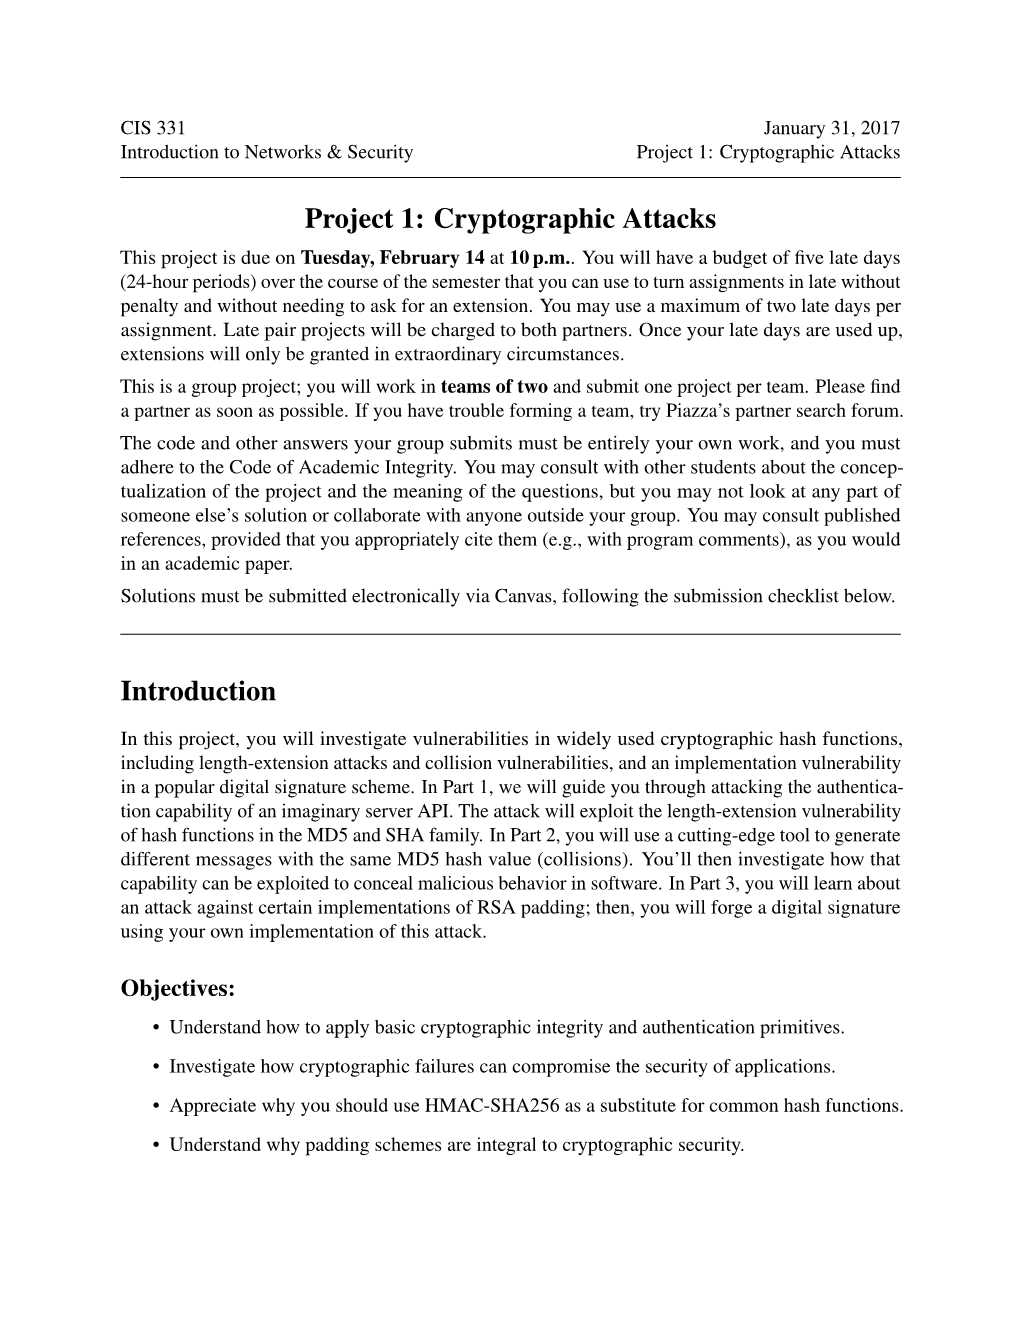 Cryptographic Attacks